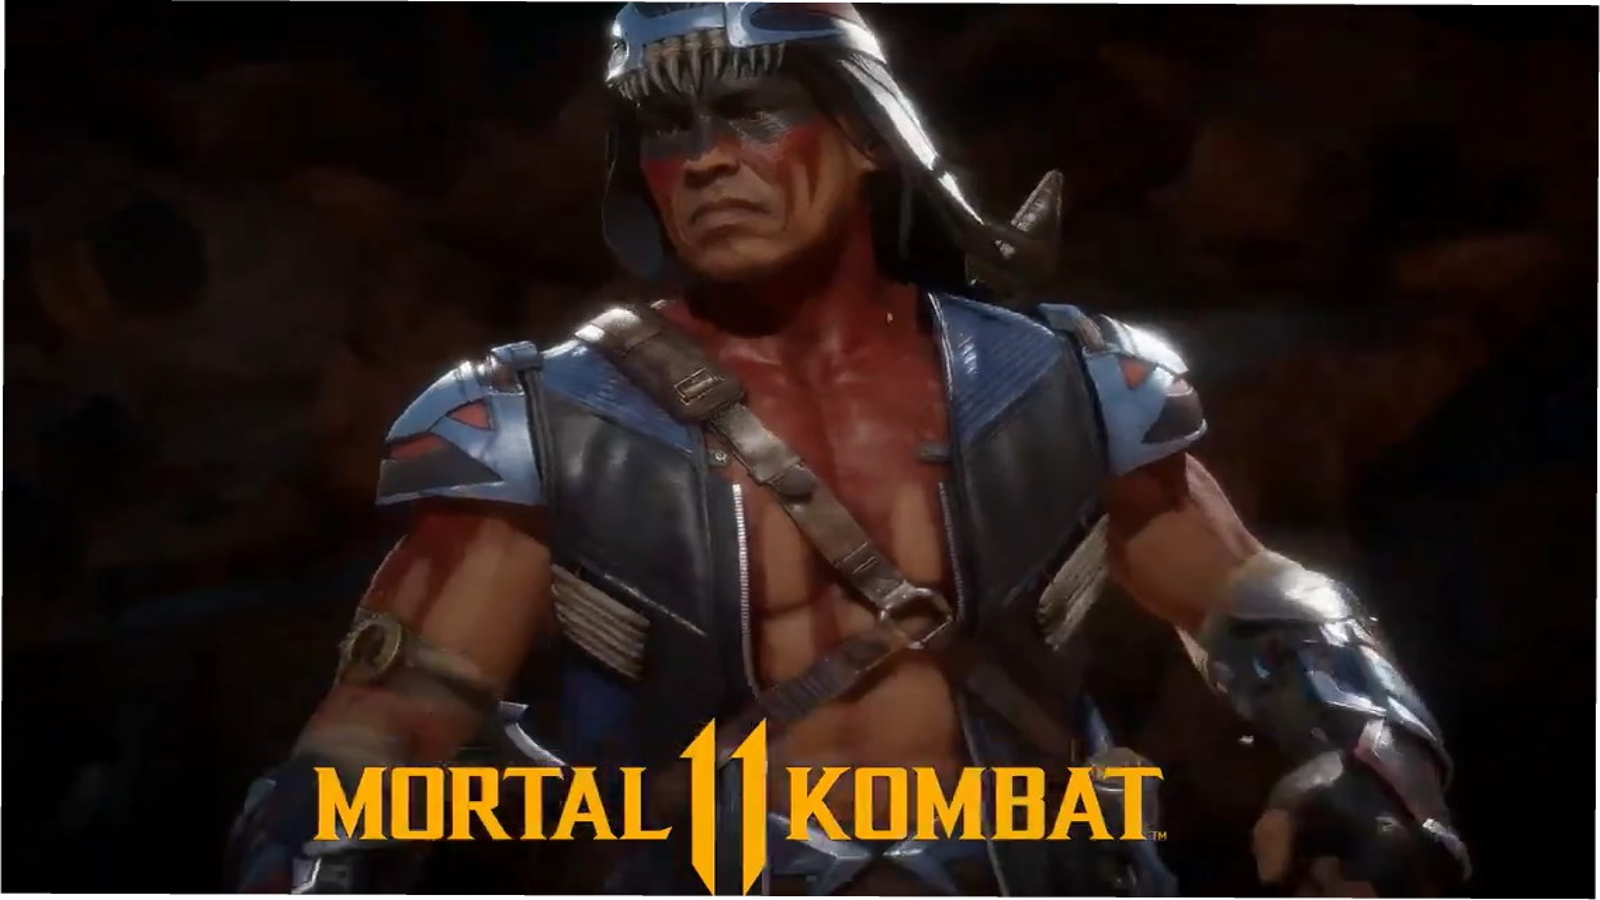 Mortal Kombat 12 Trailer Confirmed, Dropping Soon